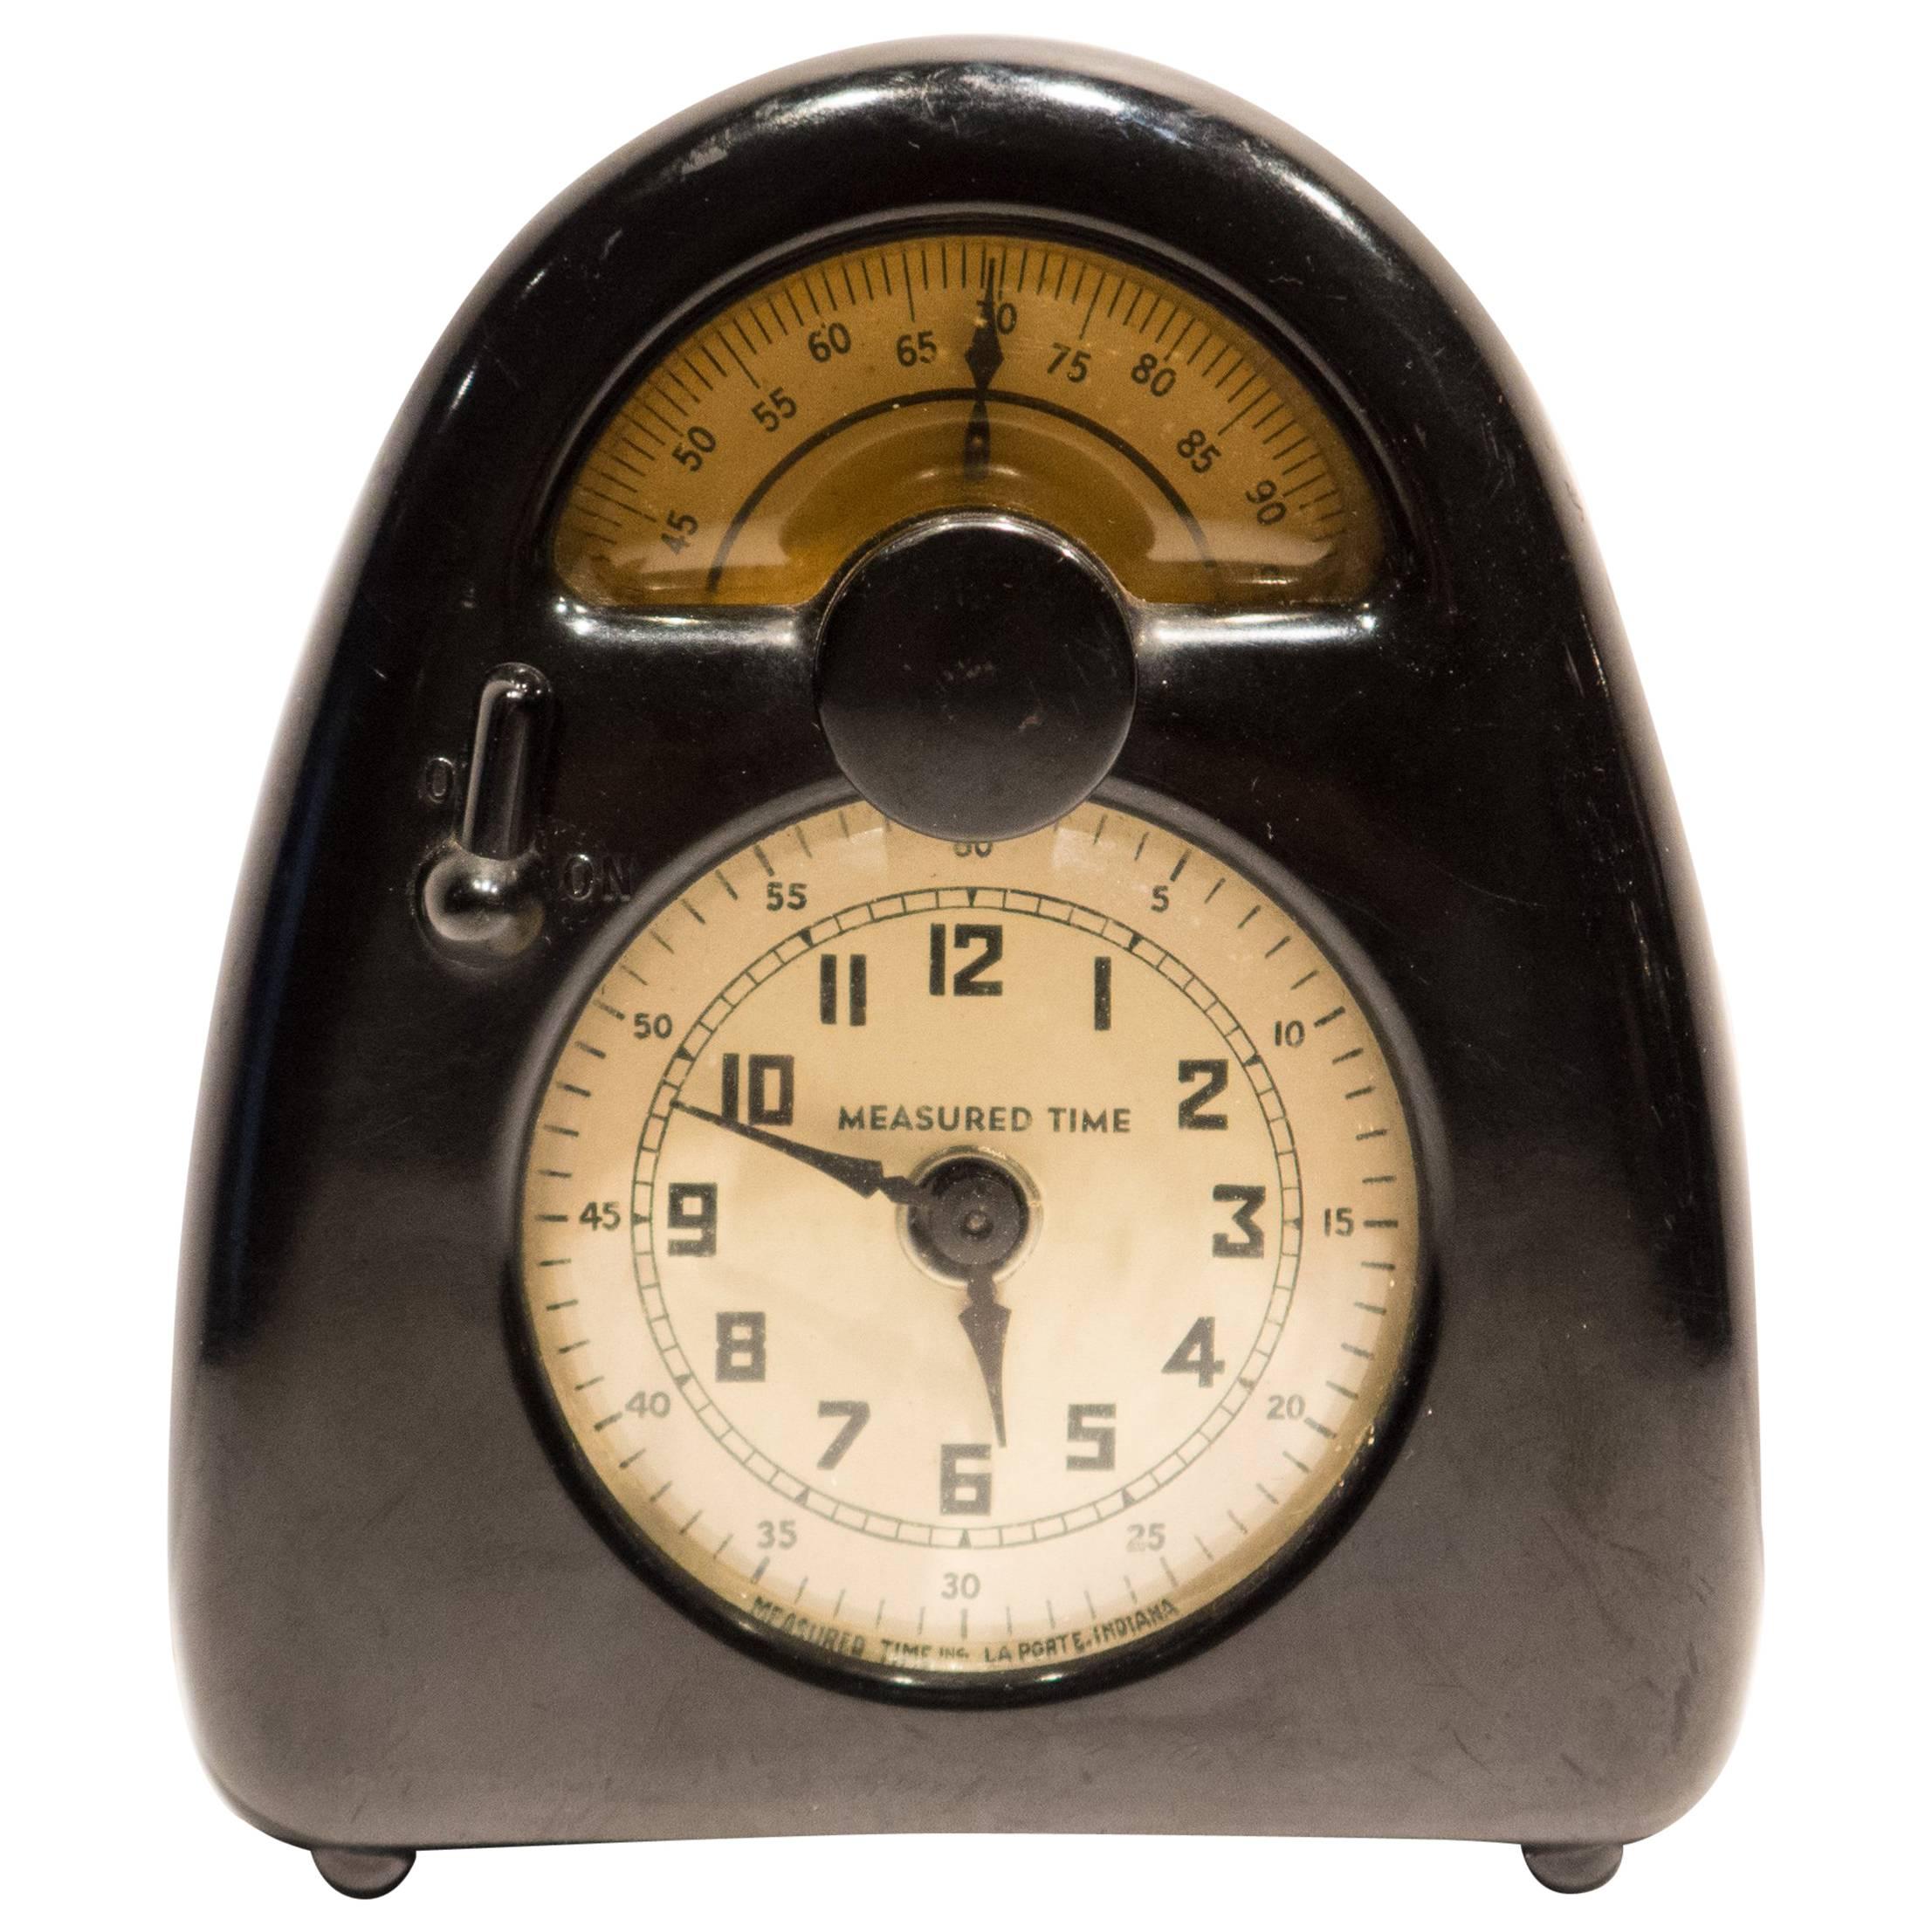 Isamu Noguchi Measured Time Clock and Kitchen Timer